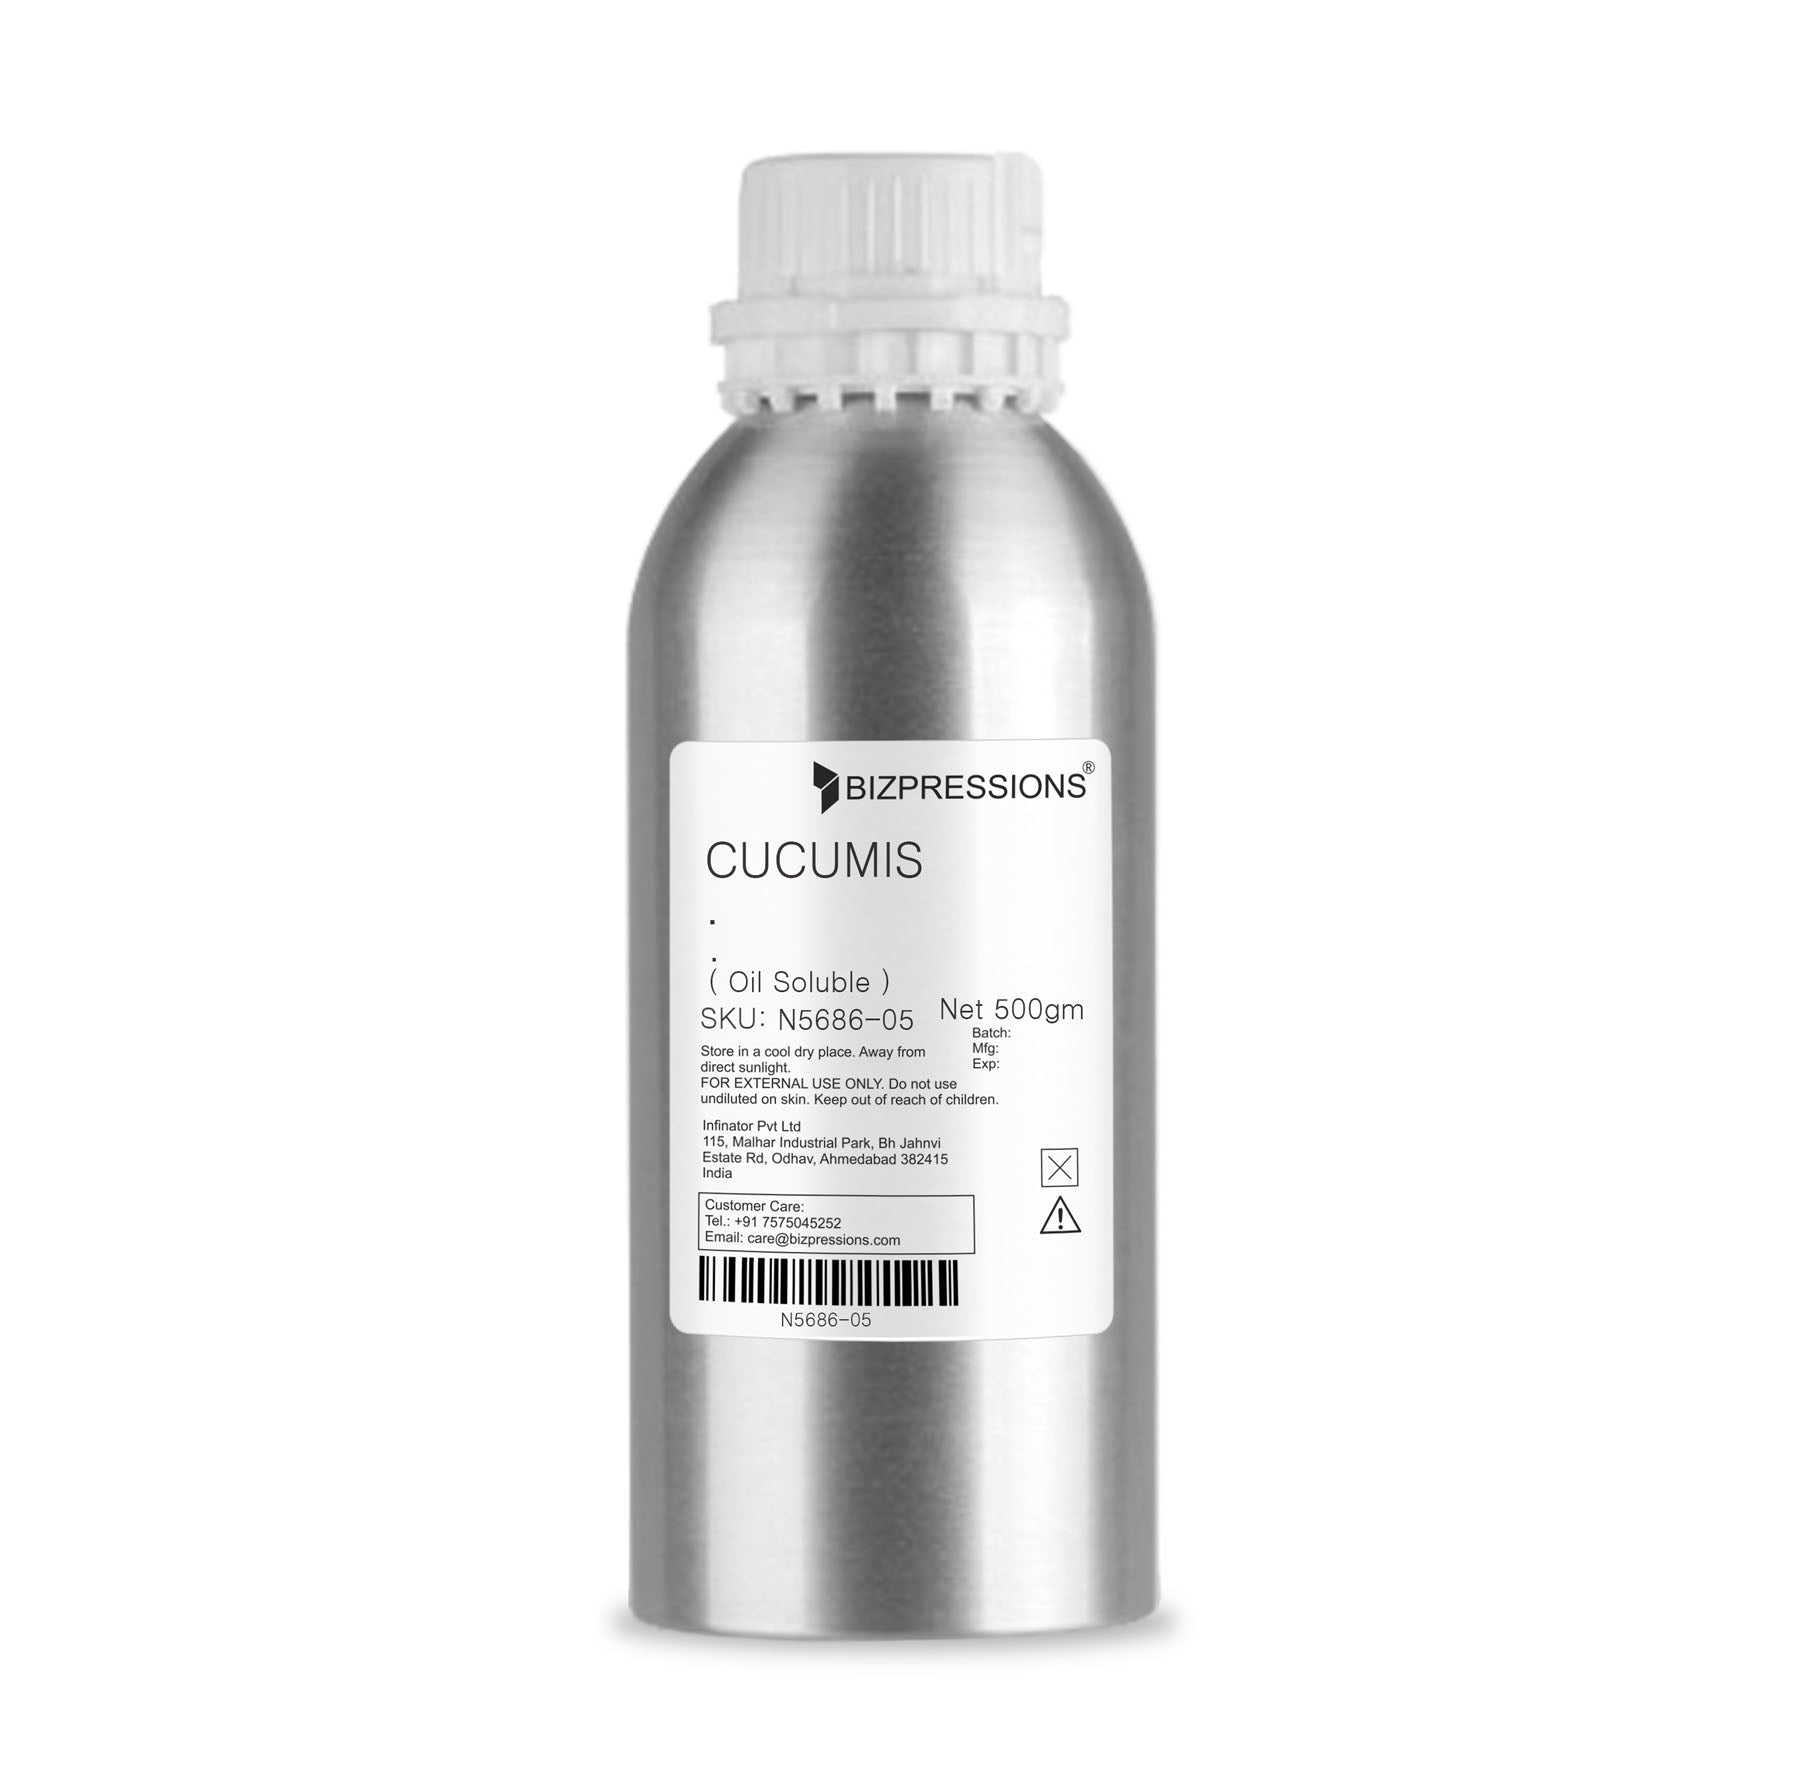 CUCUMIS - Fragrance ( Oil Soluble ) - 500 gm